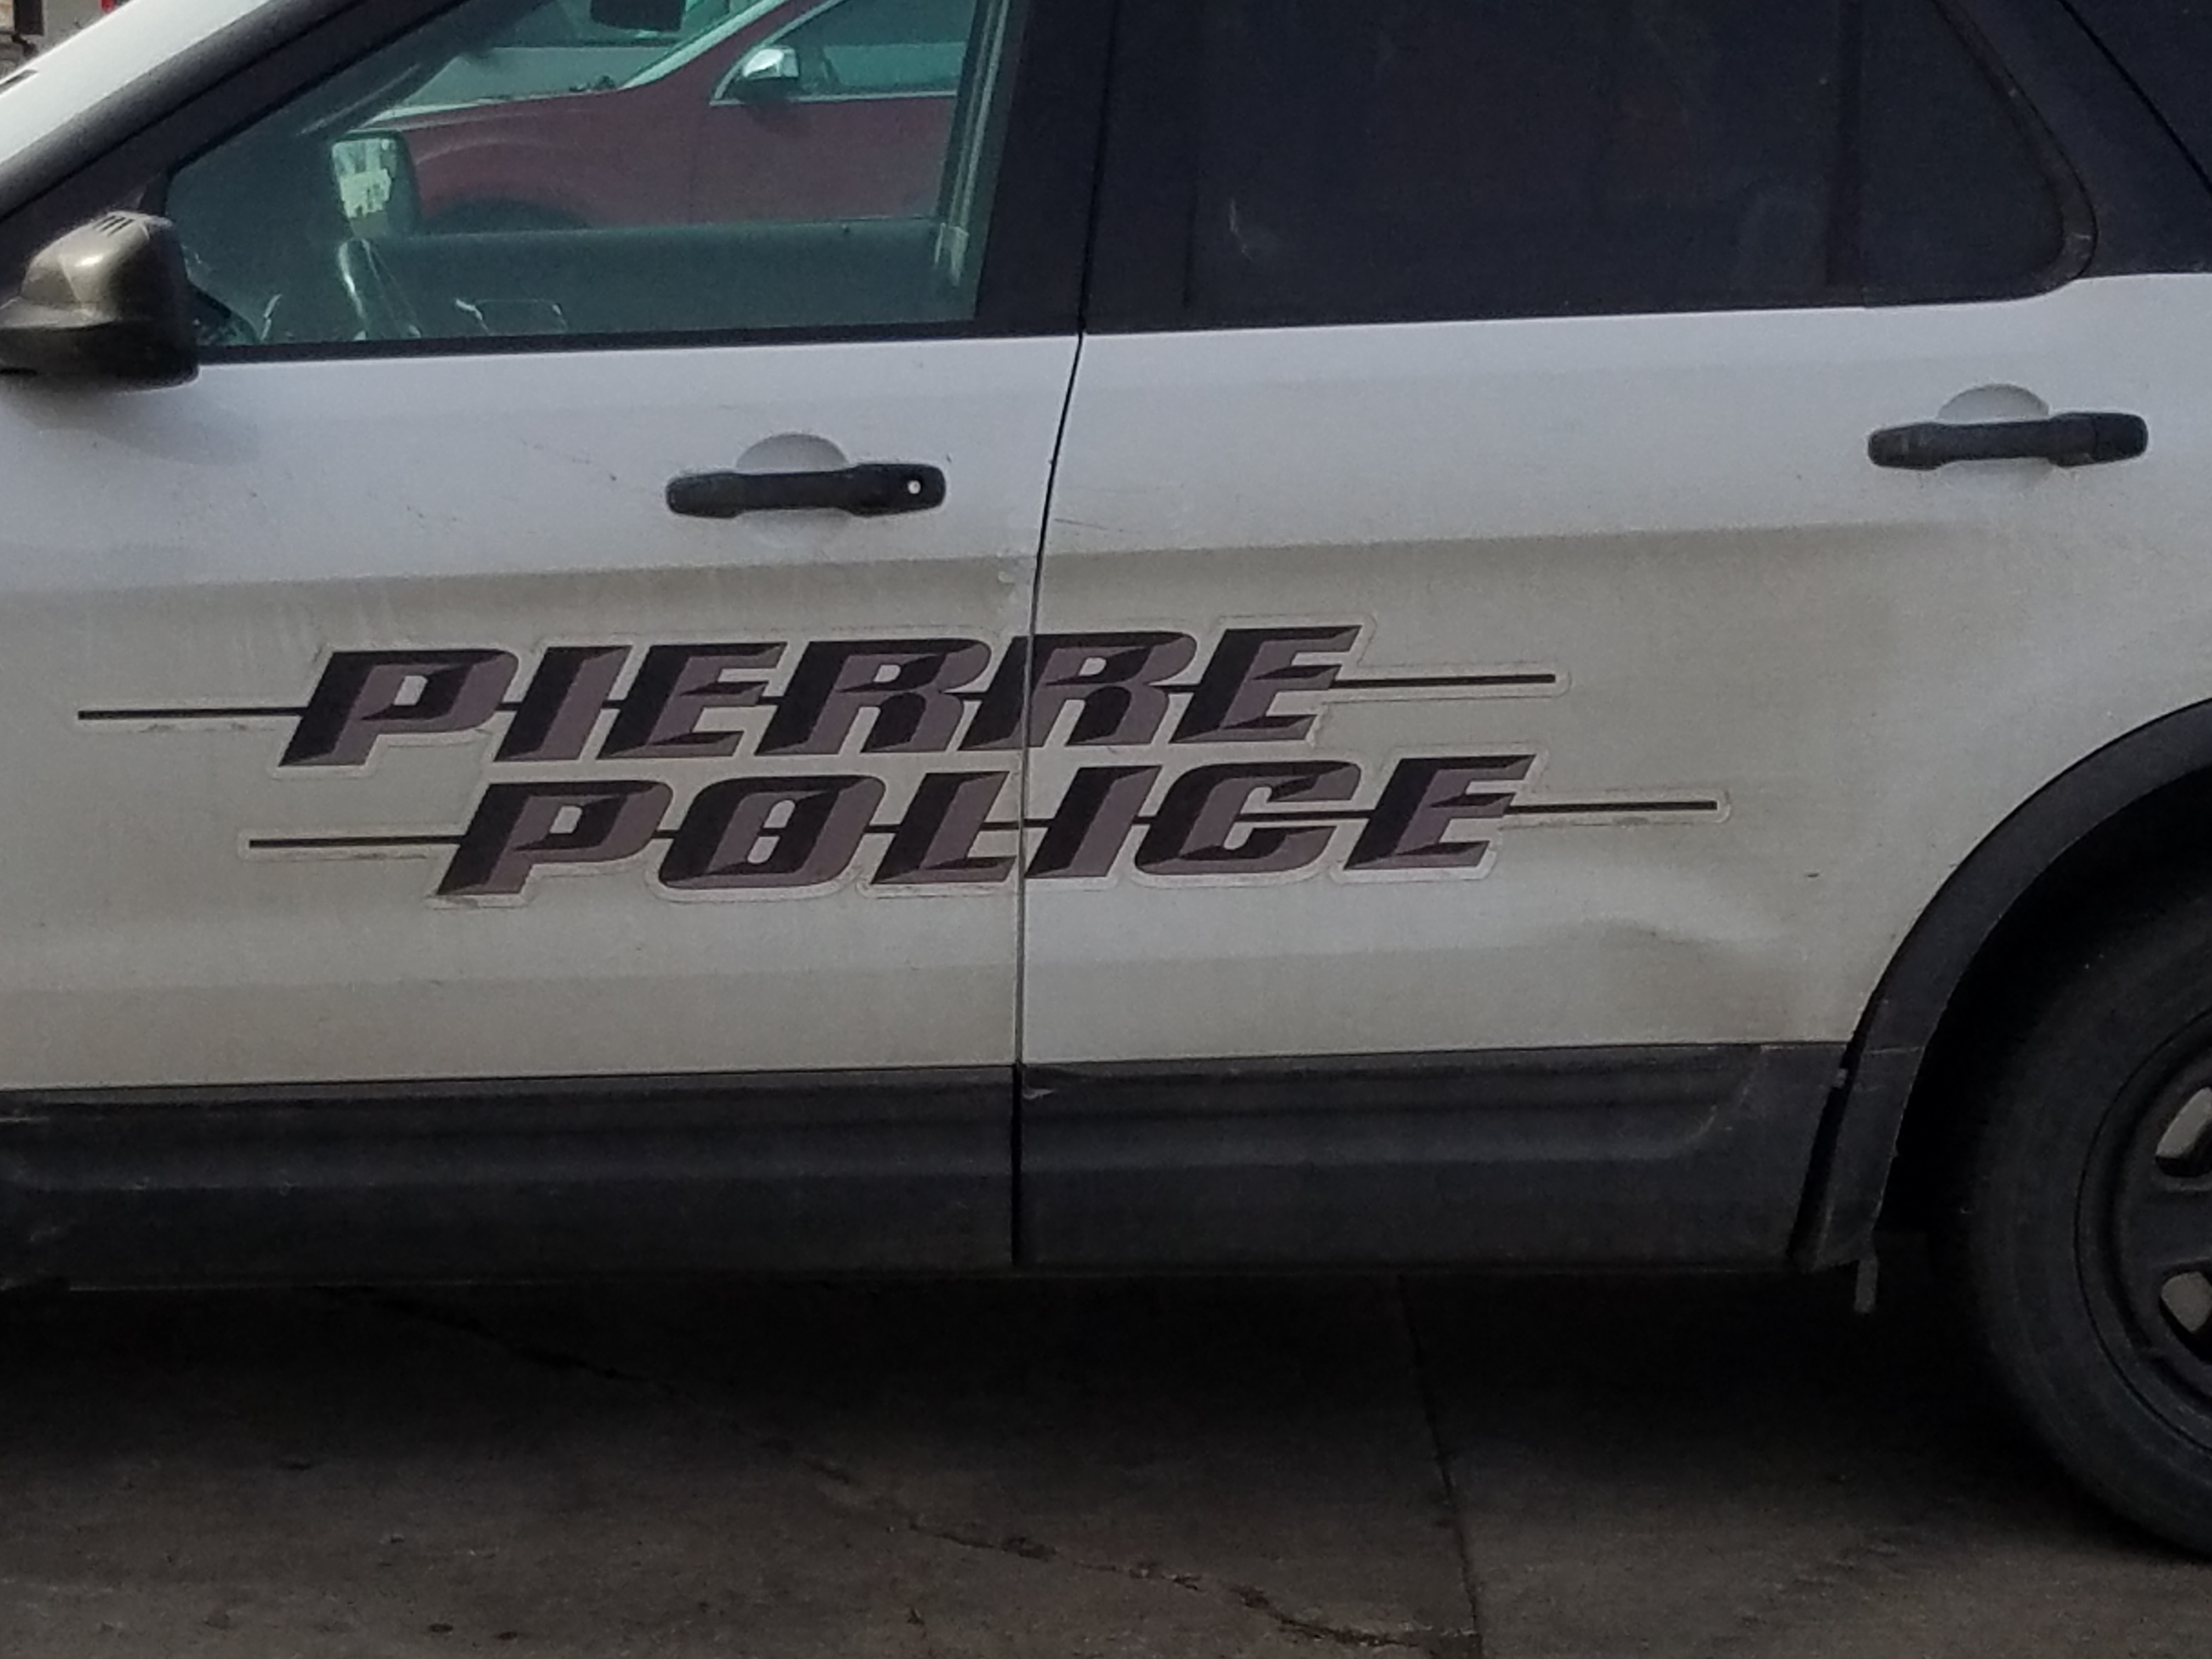 Pierre Man Arrested After Leading Police On Drunken Pursuit Through Pierre